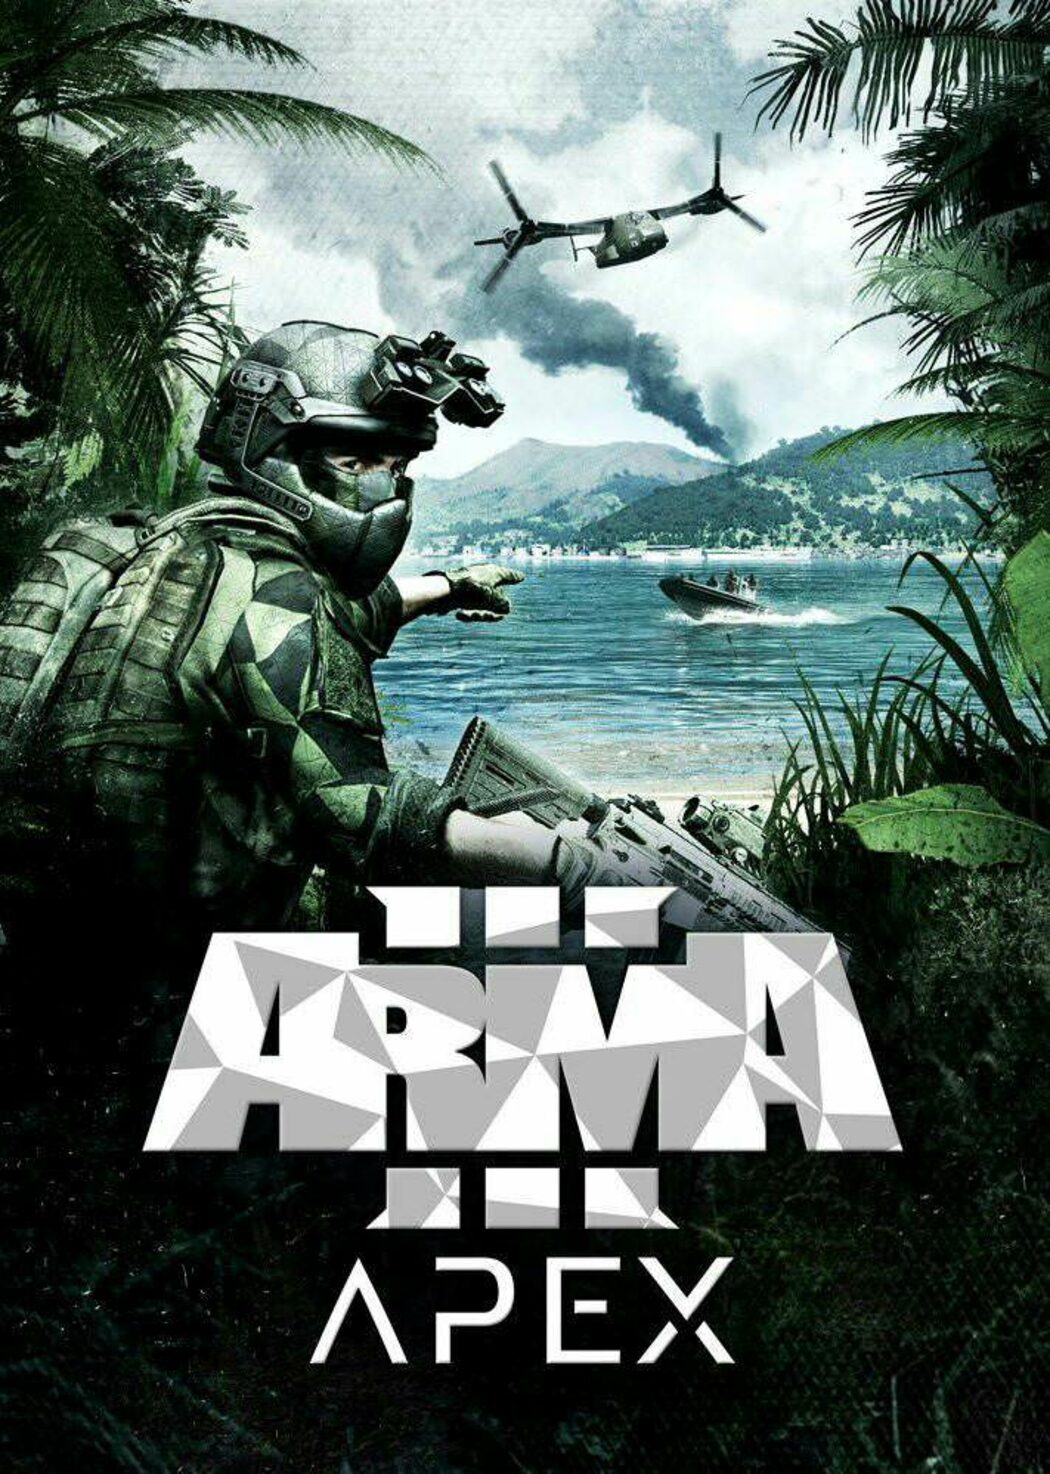 Arma 3: Publisher - Bohemia Interactive Community